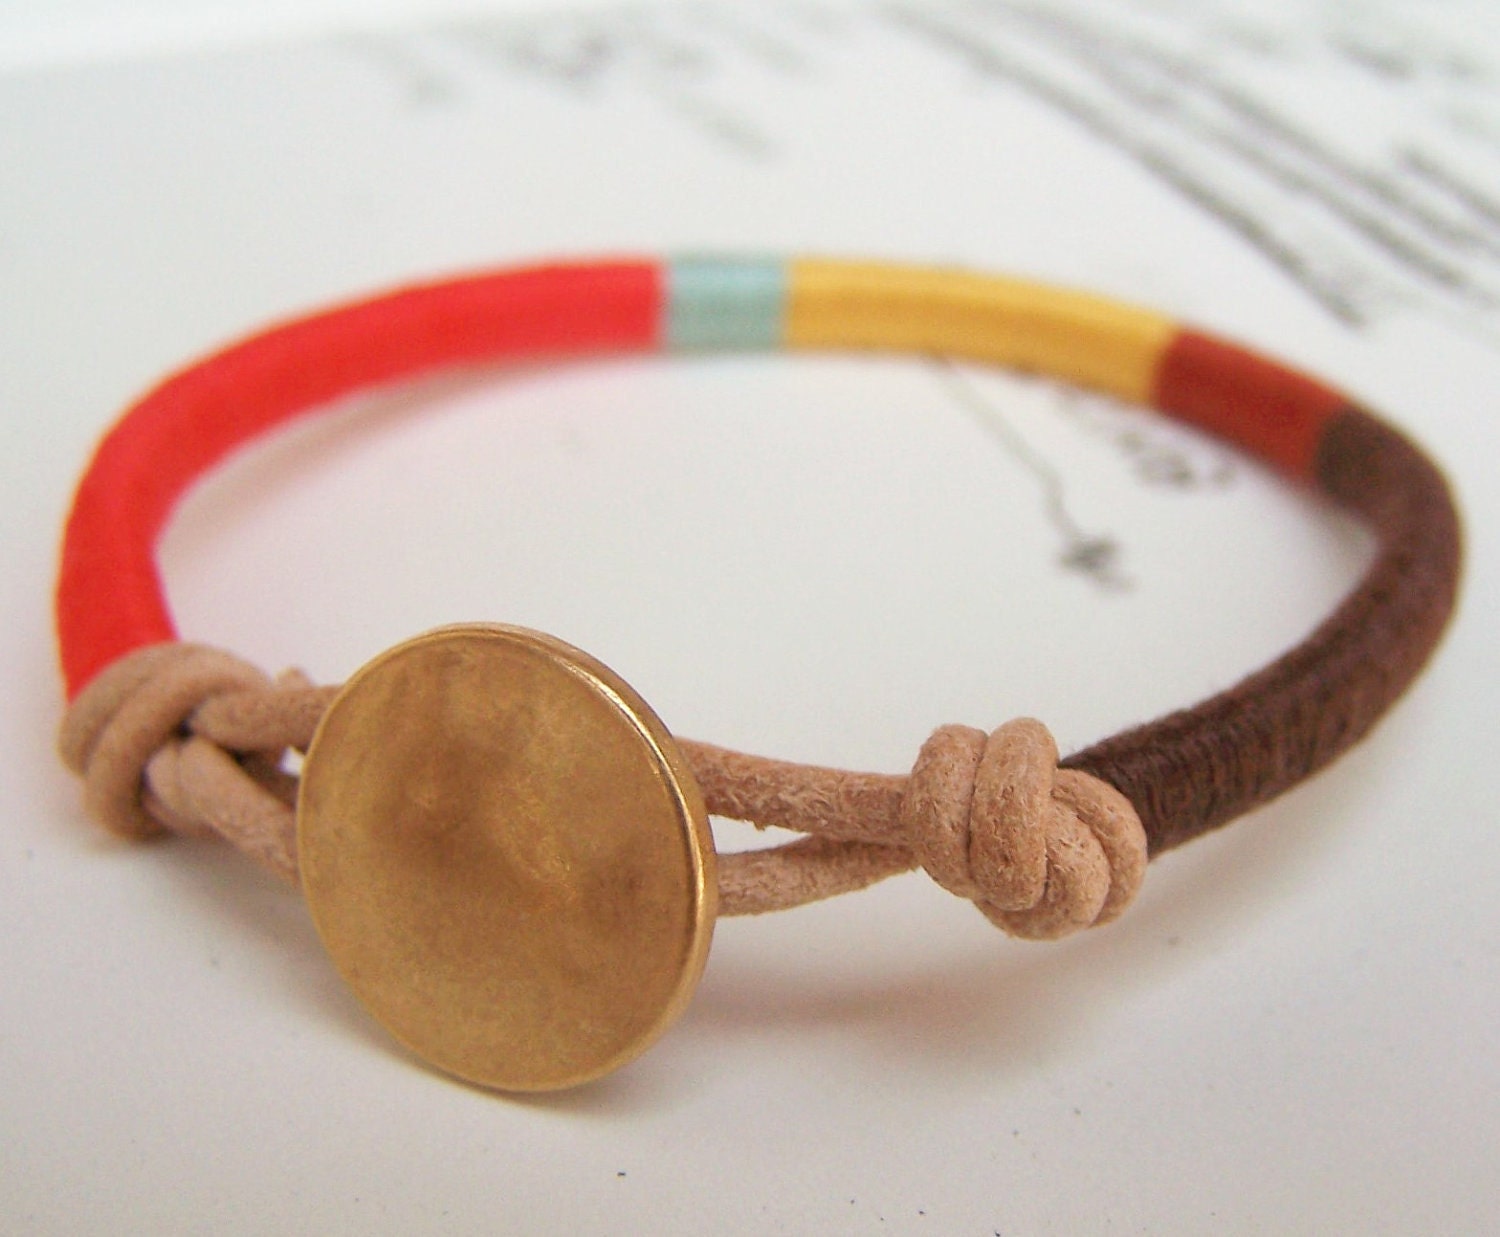 COOPER bracelet - textile, leather, button closure (chocolate rust goldenrod seafoam persimmon), handmade jewelry